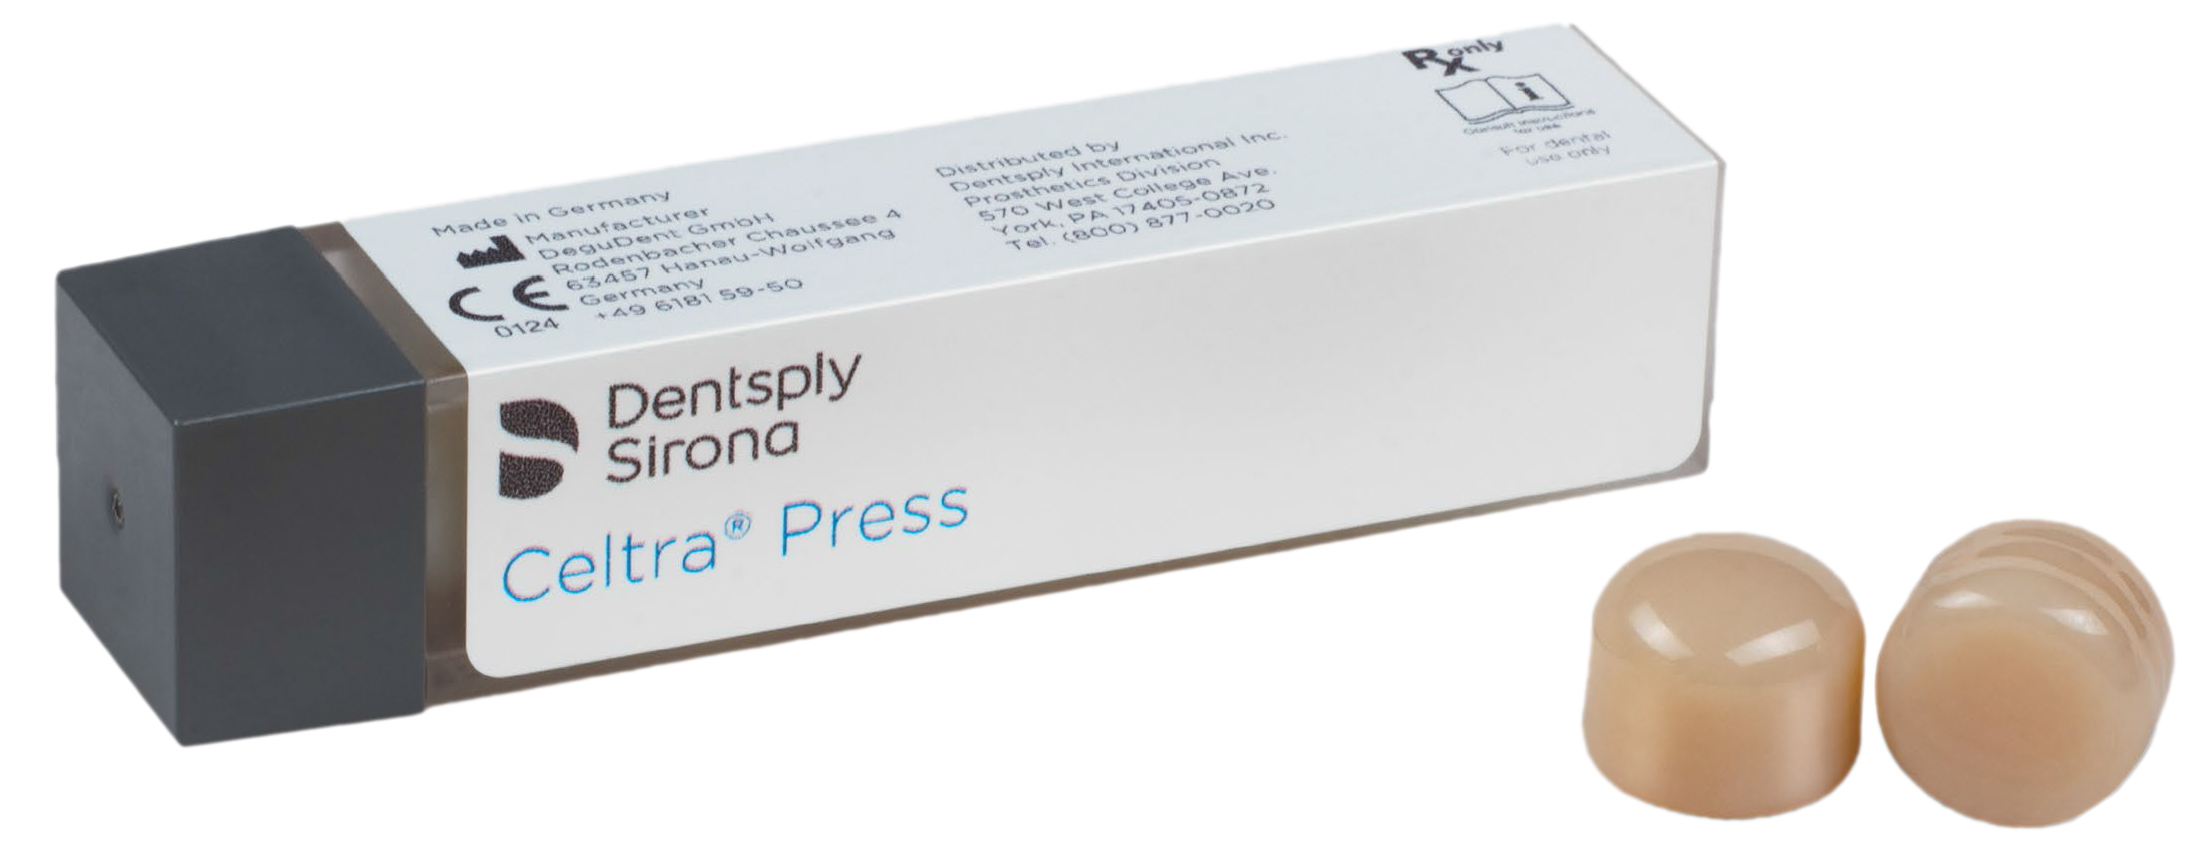 Заготовки Celtra Press MT средняя прозрачность (5х3 г) Dentsply Sirona